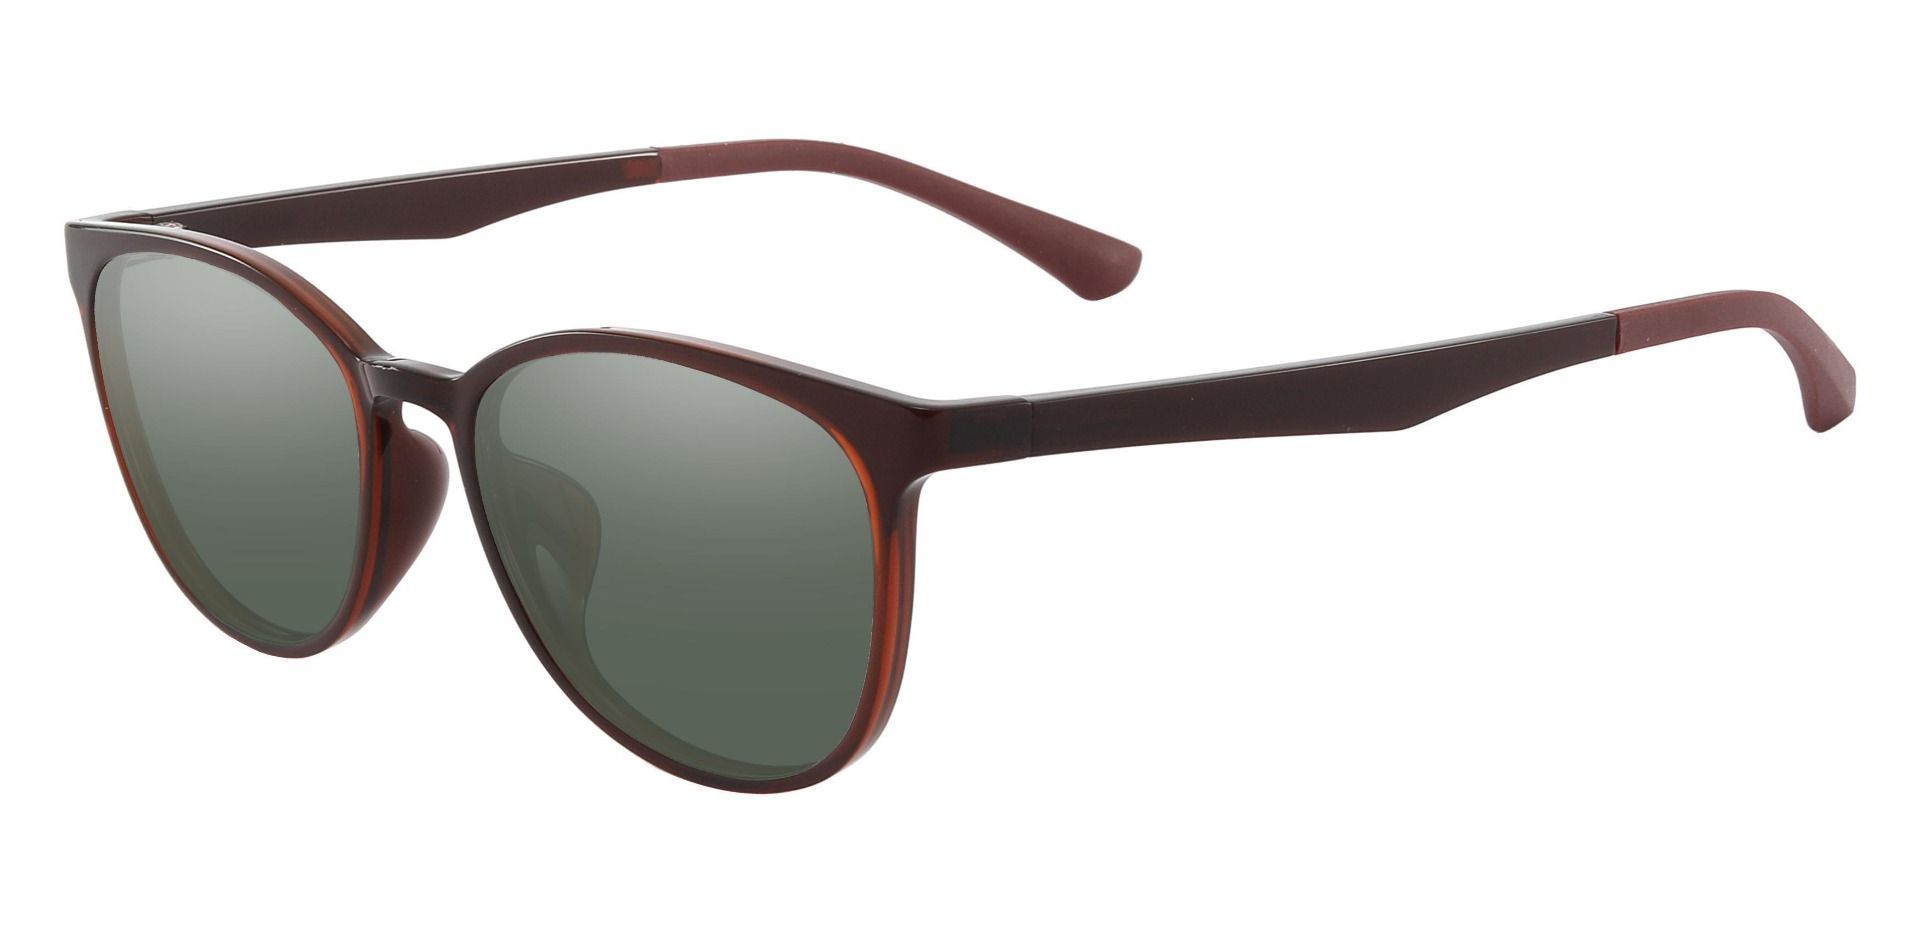 Pembroke Oval Prescription Sunglasses - Brown Frame With Green Lenses